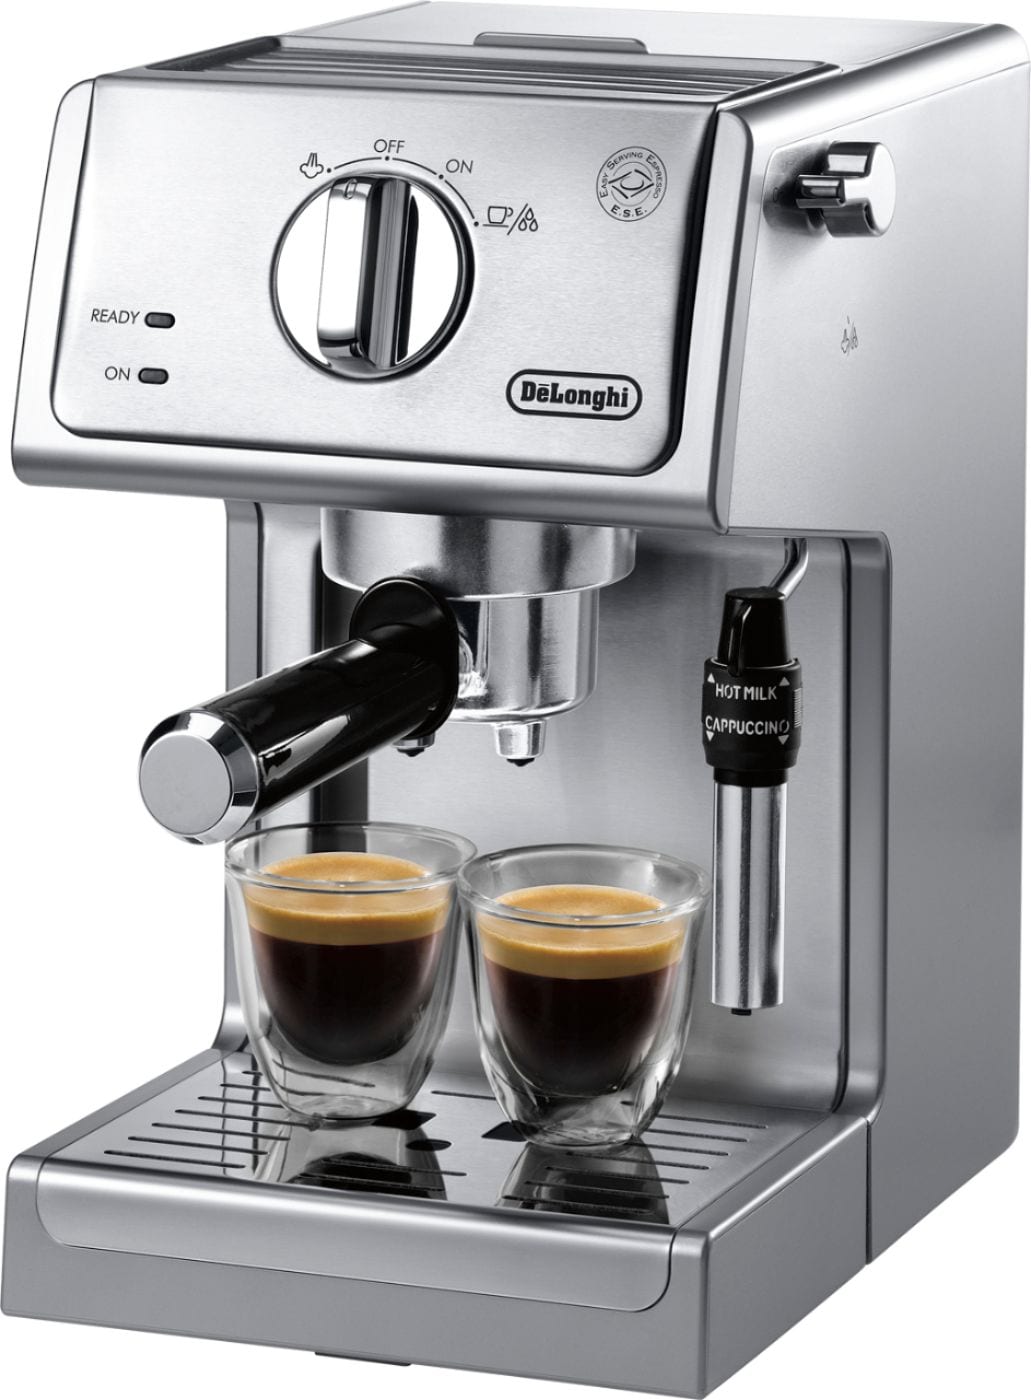 De'Longhi - Manual Espresso Machine - Stainless Steel_2